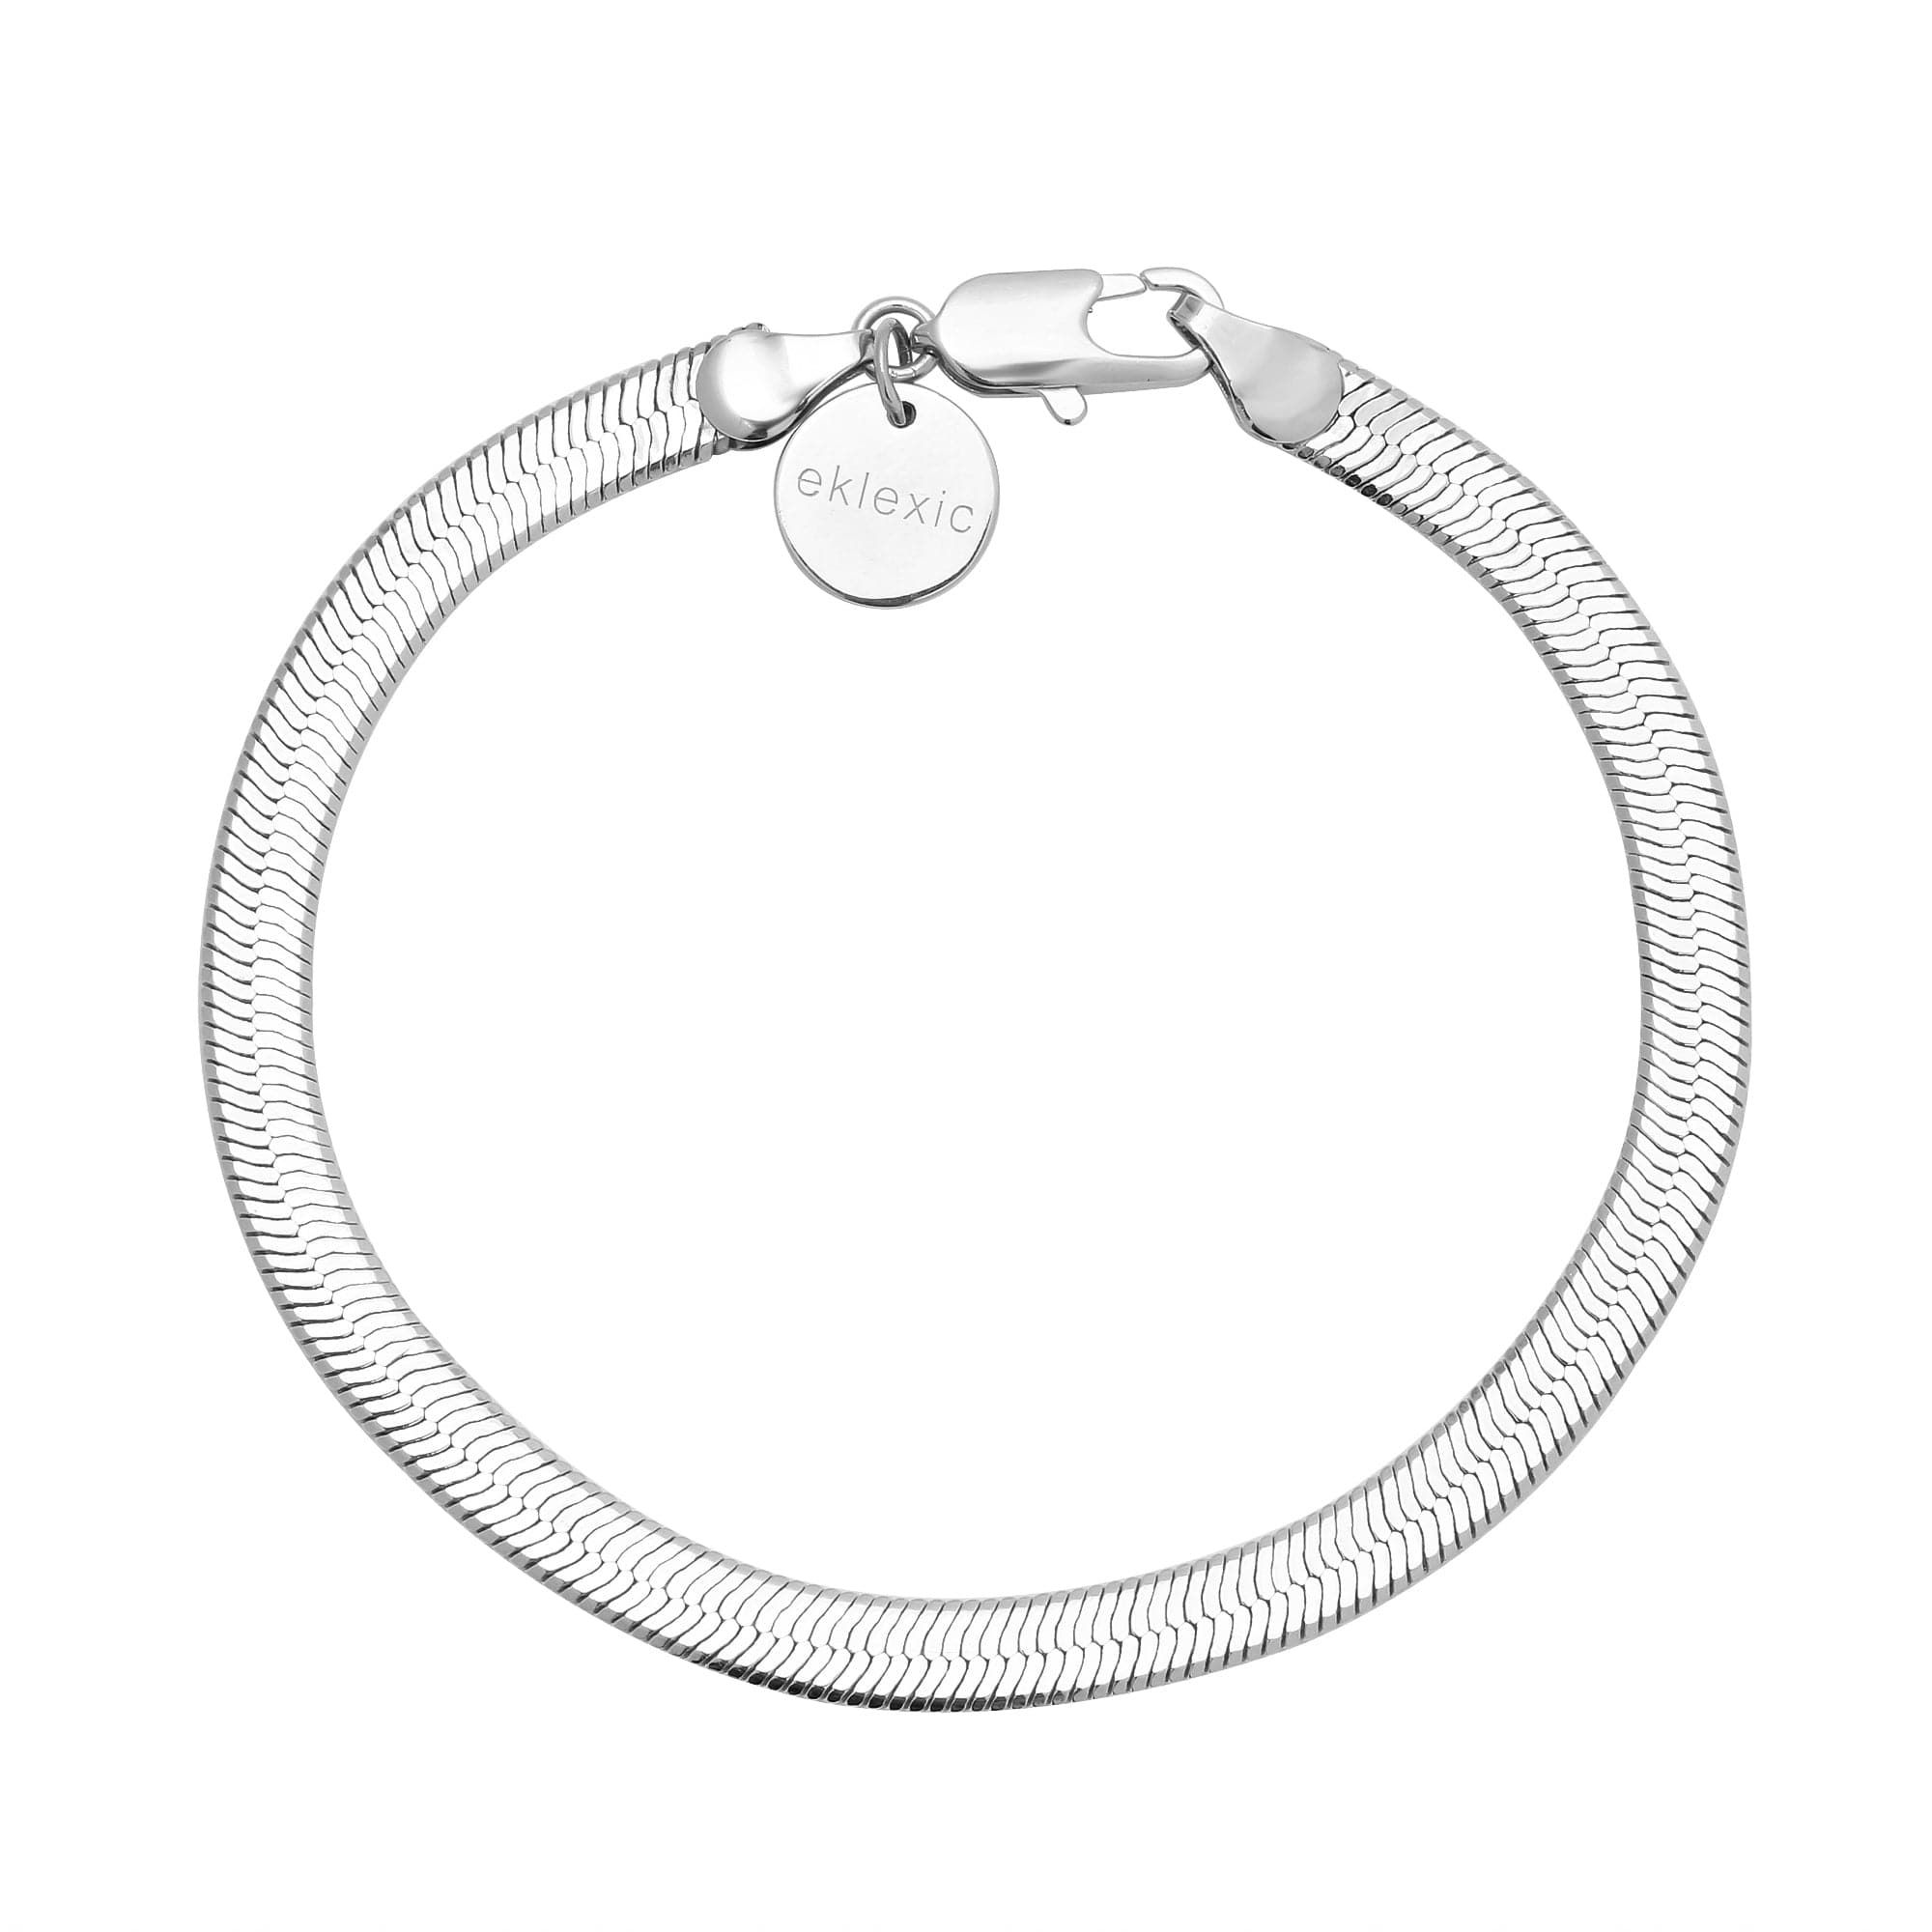 5mm Viper Chain Bracelet - eklexic